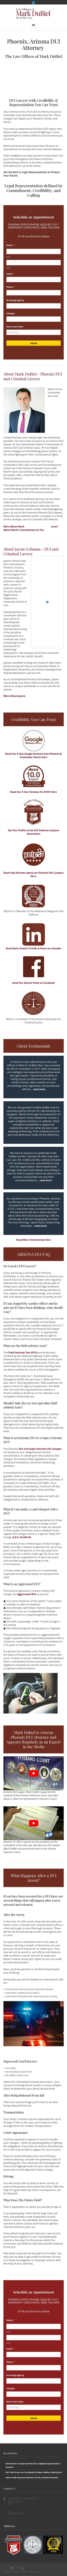 The Law Offices of Mark D. DuBiel - Phoenix AZ Lawyers